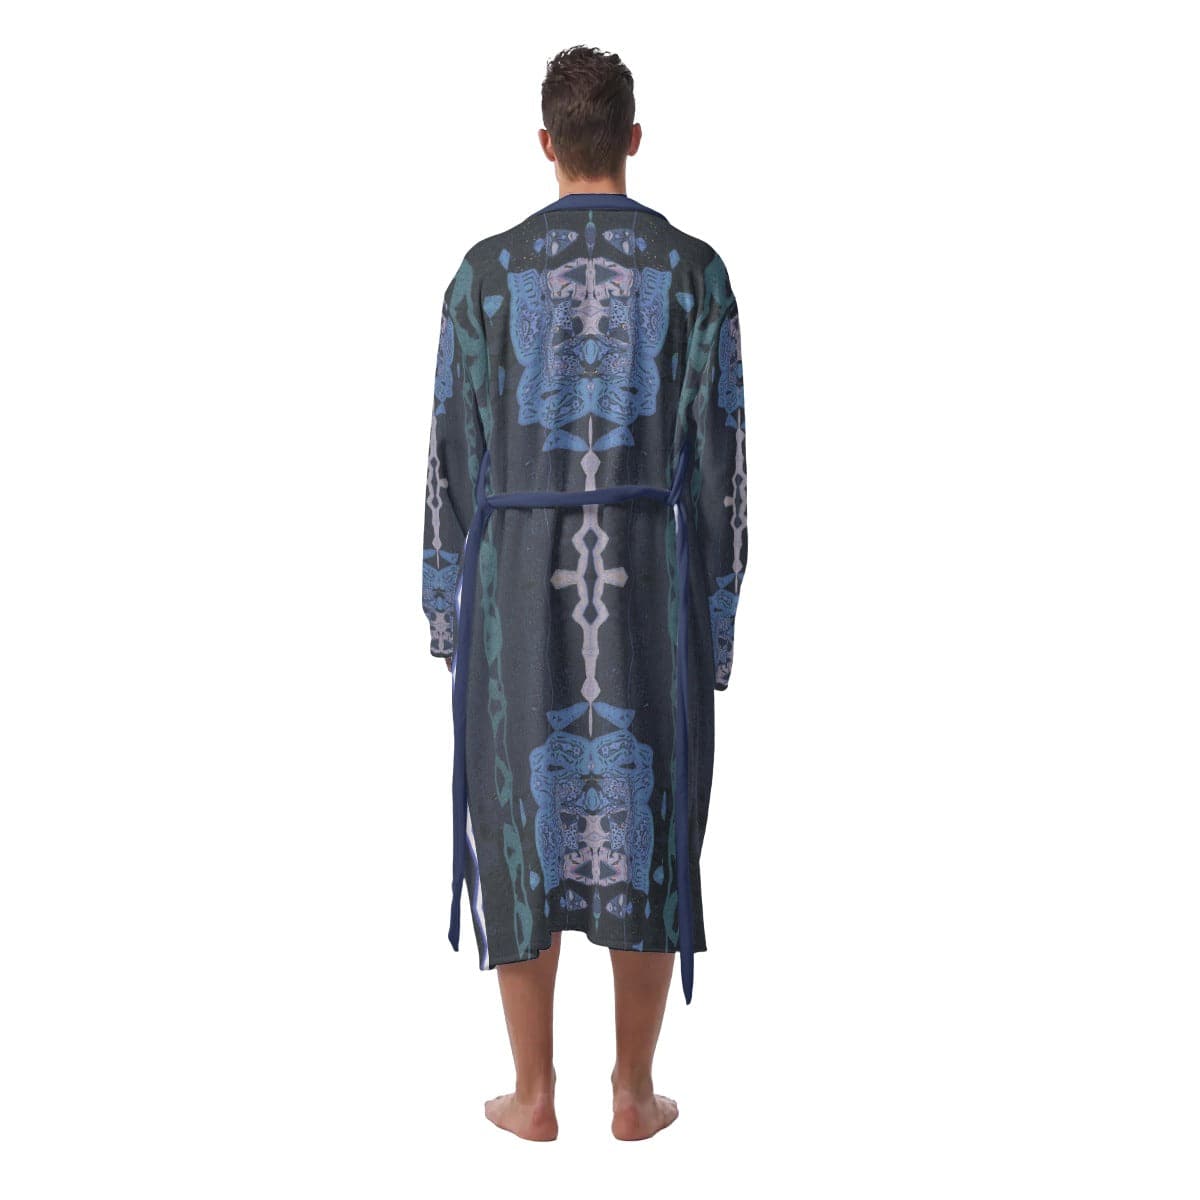 Sensus Studio Designed Templar Pattern Heavy Fleece (Bath)Robe for Men